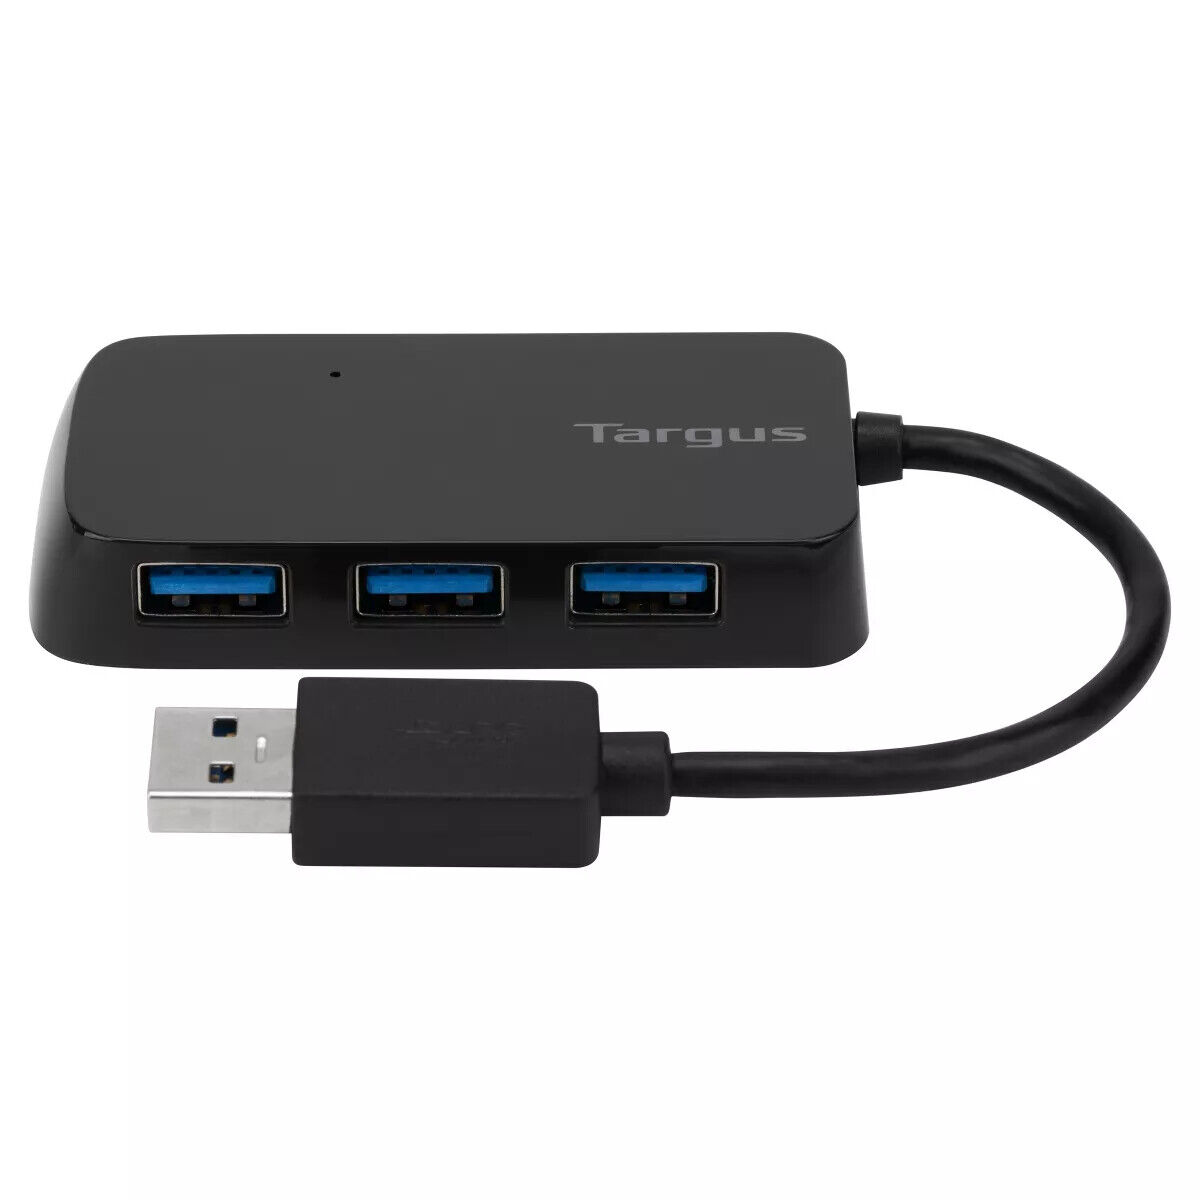 Targus 4 Port USB Hub - NEW